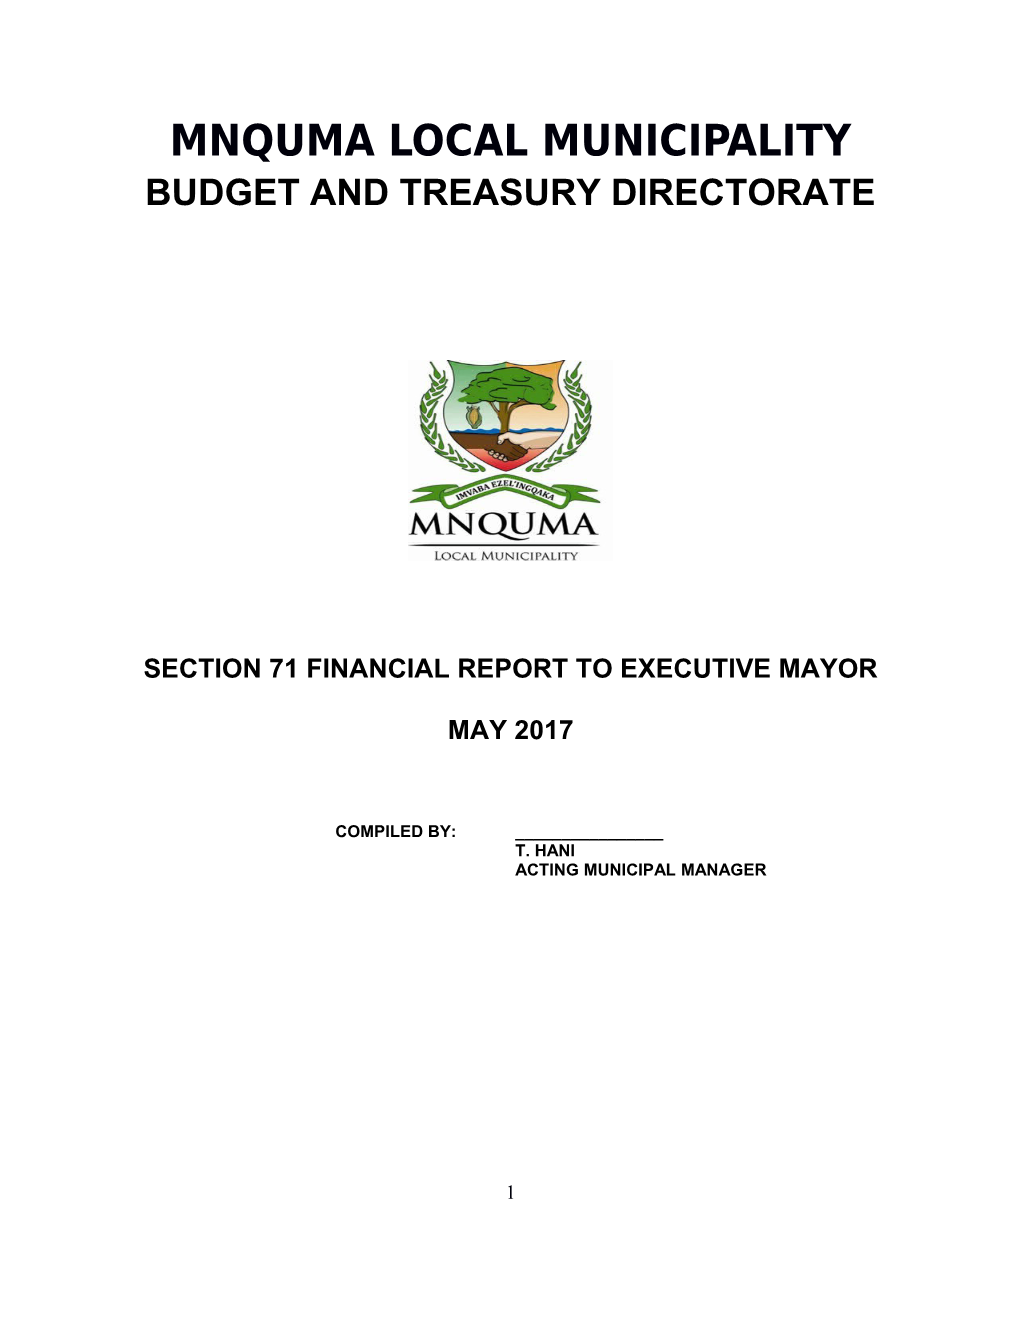 Budget and Treasury Directorate